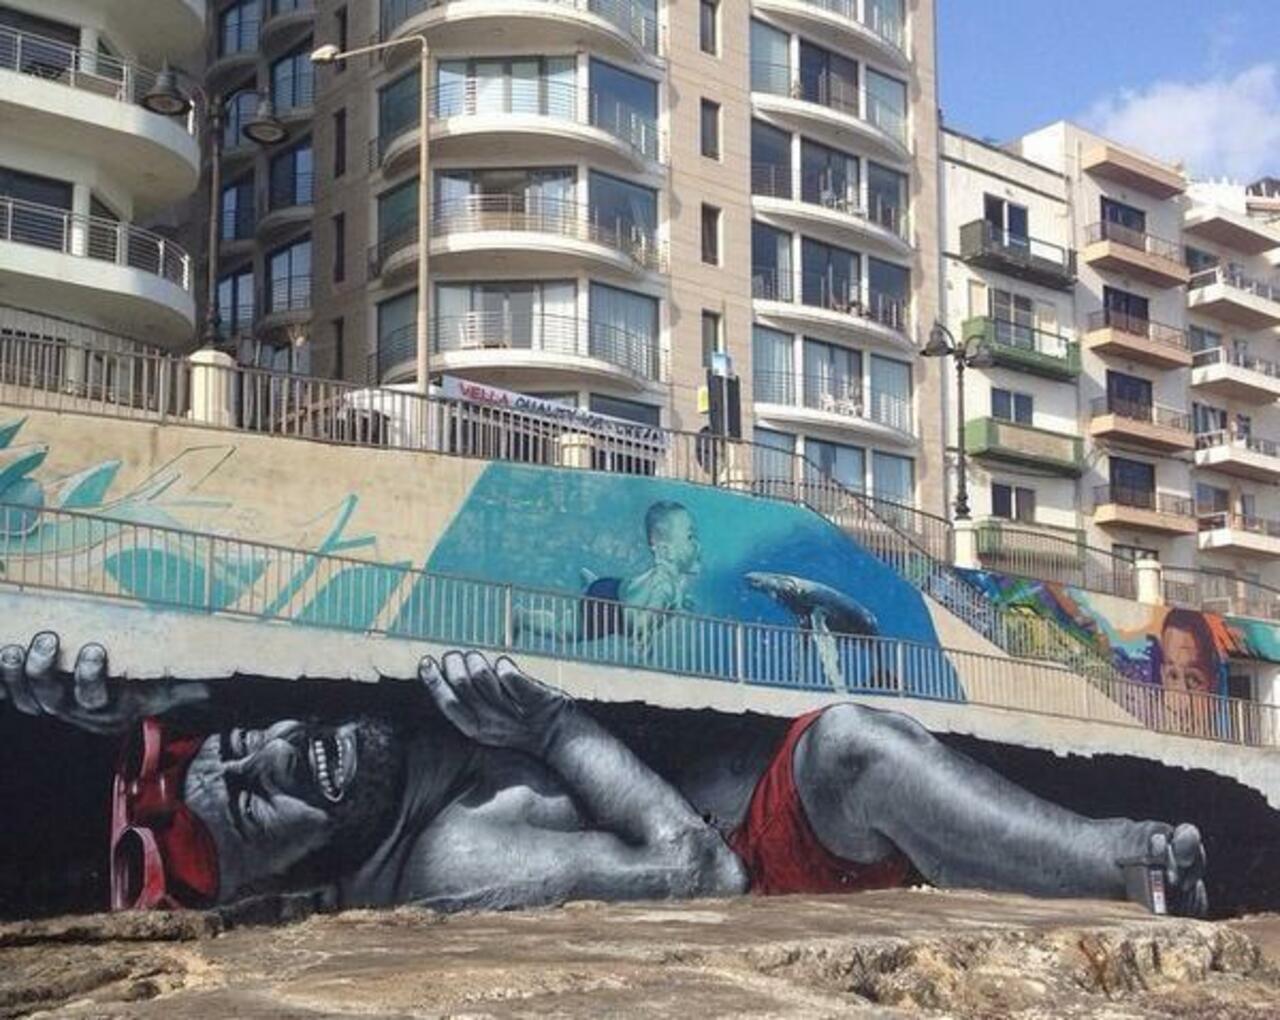 RT @AuKeats: #MTO hyperrealistic #streetart in #Sliema #Malta #switch #graffiti #bedifferent #art #arte http://t.co/jiF6fHqQ2h